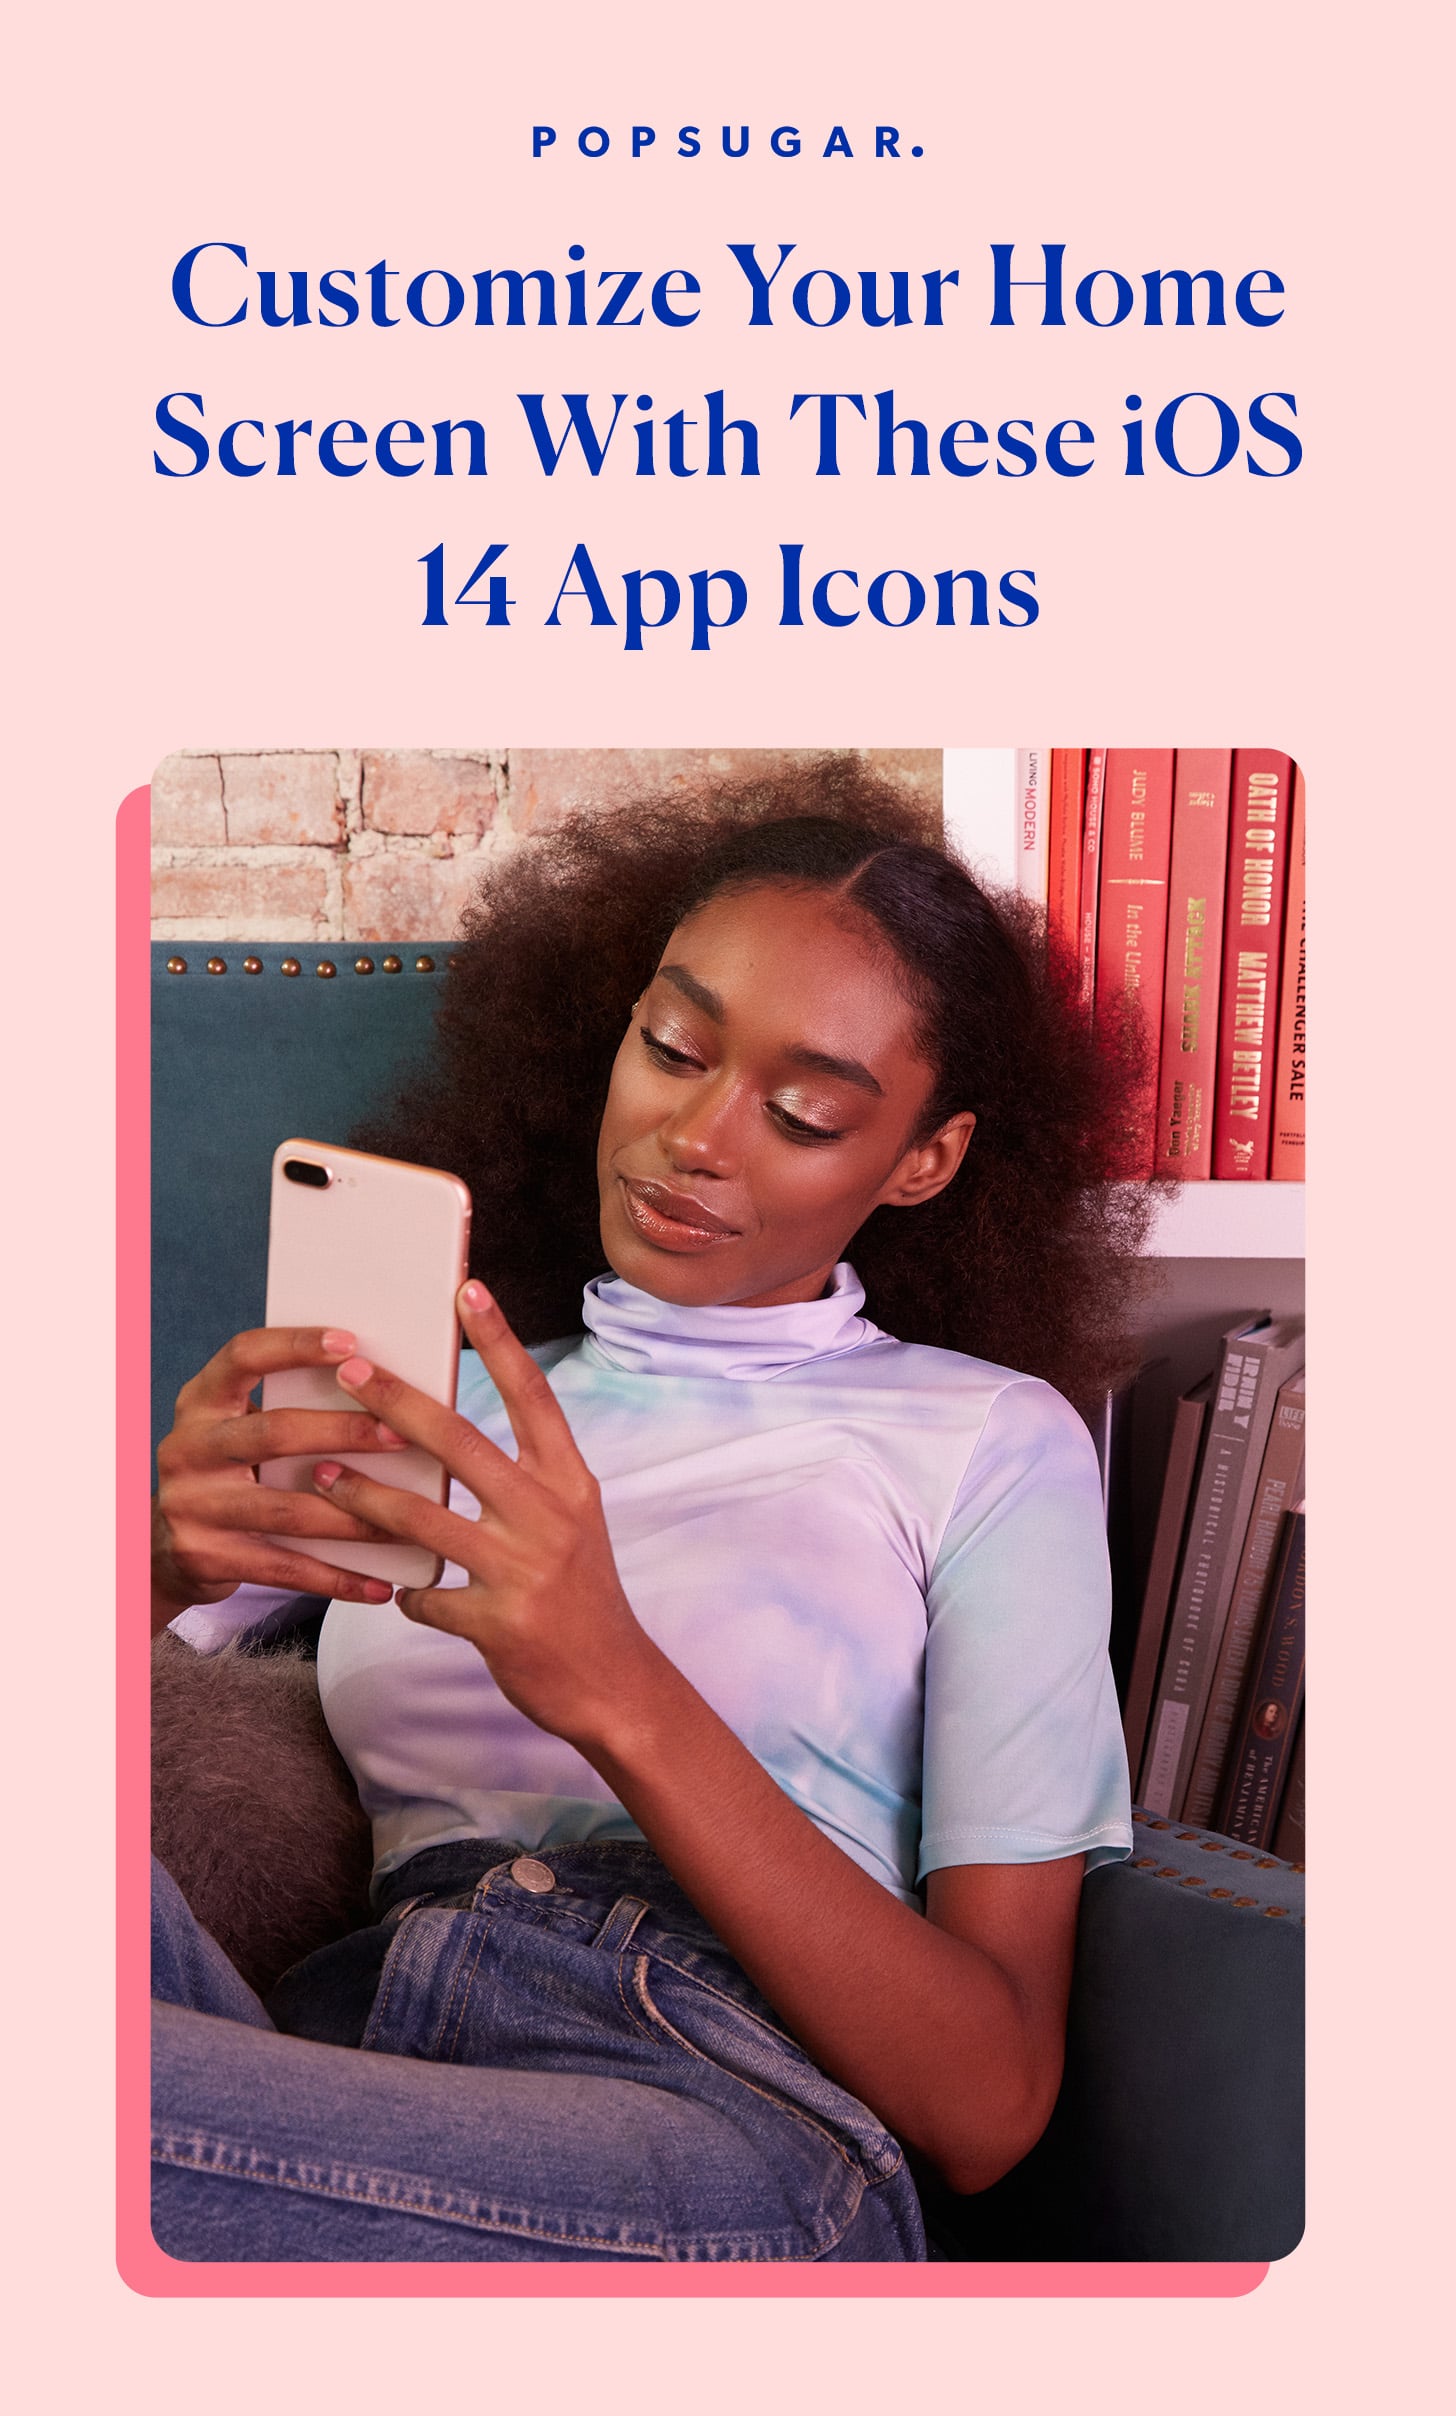 App Icons Cover Photos, Widget Covers, Minimalist Aesthetic iOS Icons